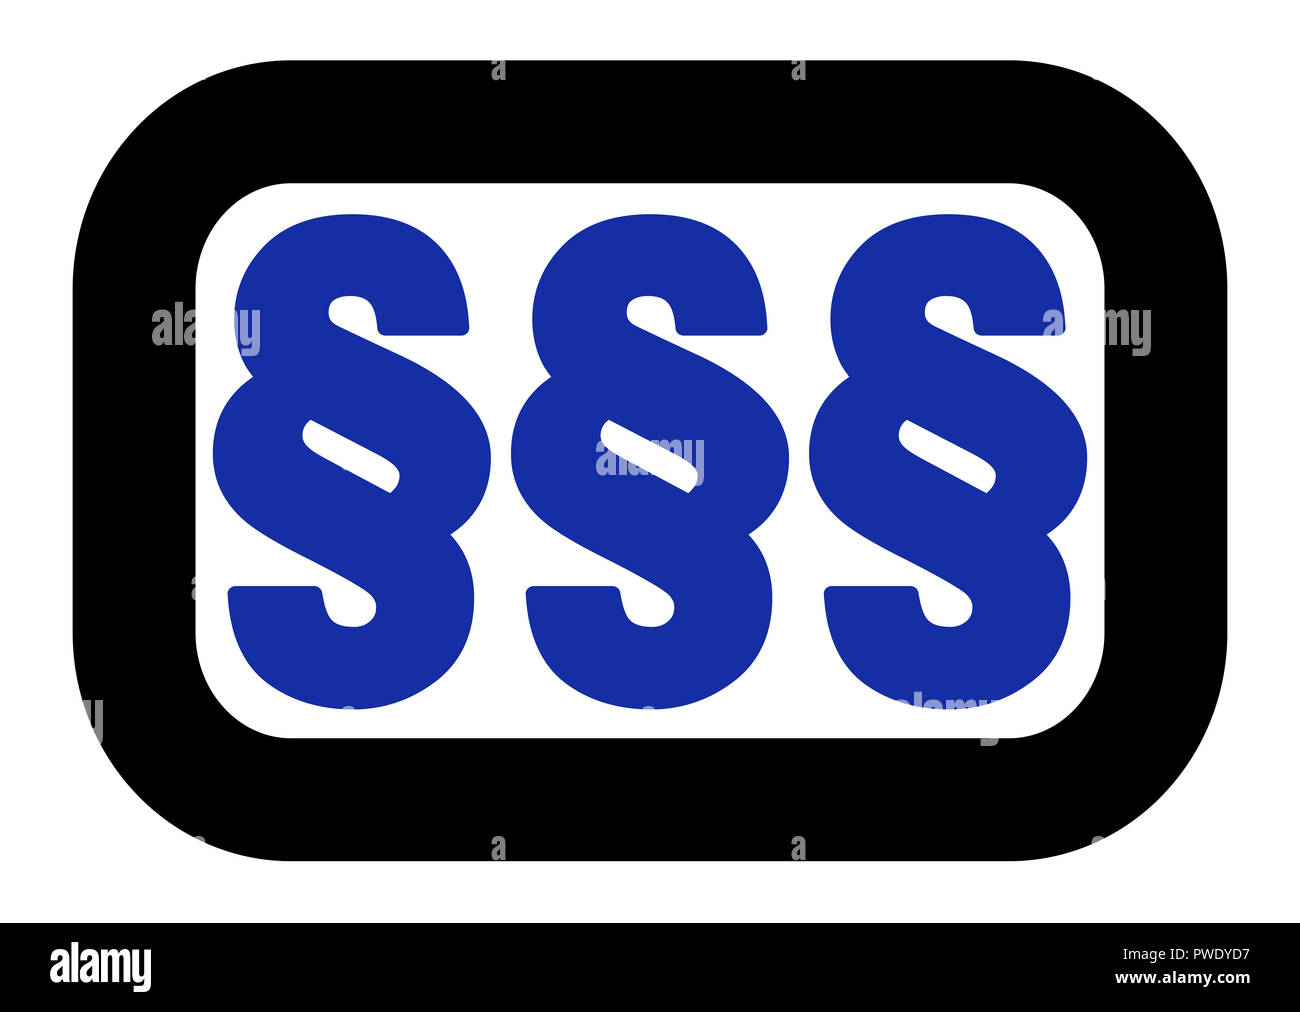 Paragraph sign logo, three blue symbols, rounded black frame. Simple illustration on white background. Stock Photo